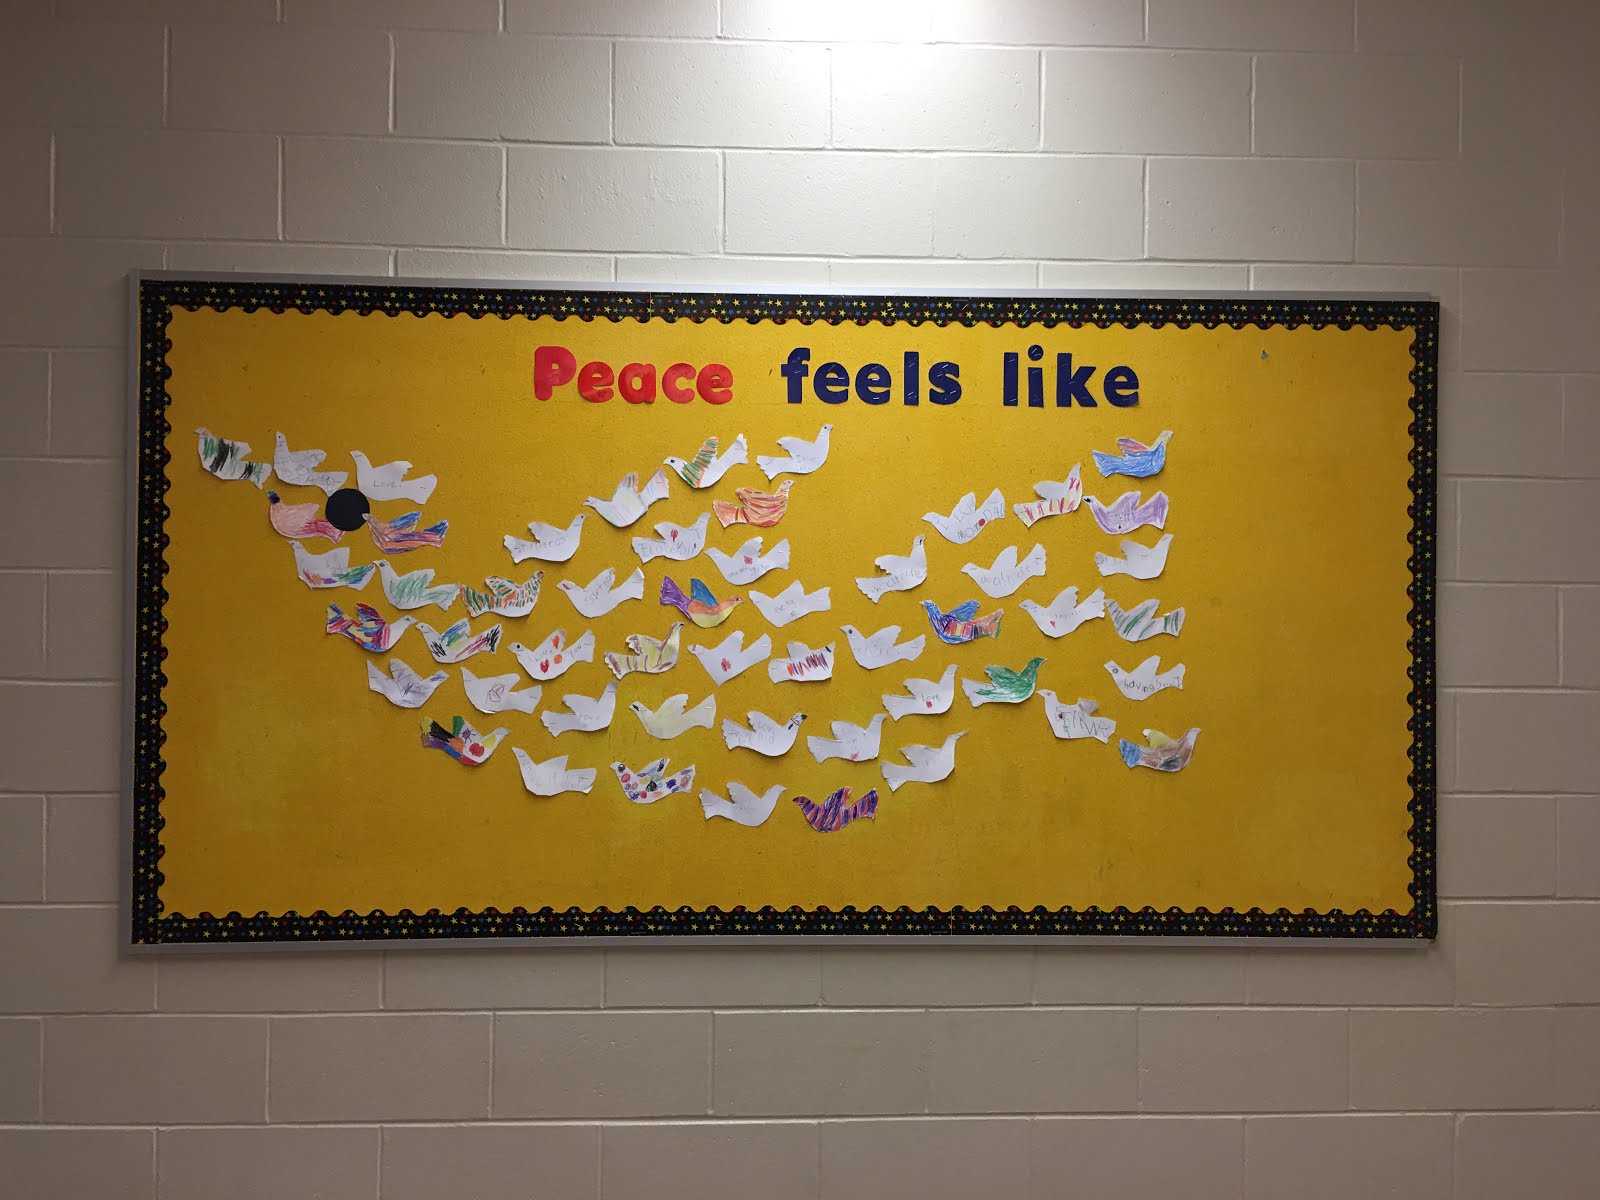 Our Peace bulletin board